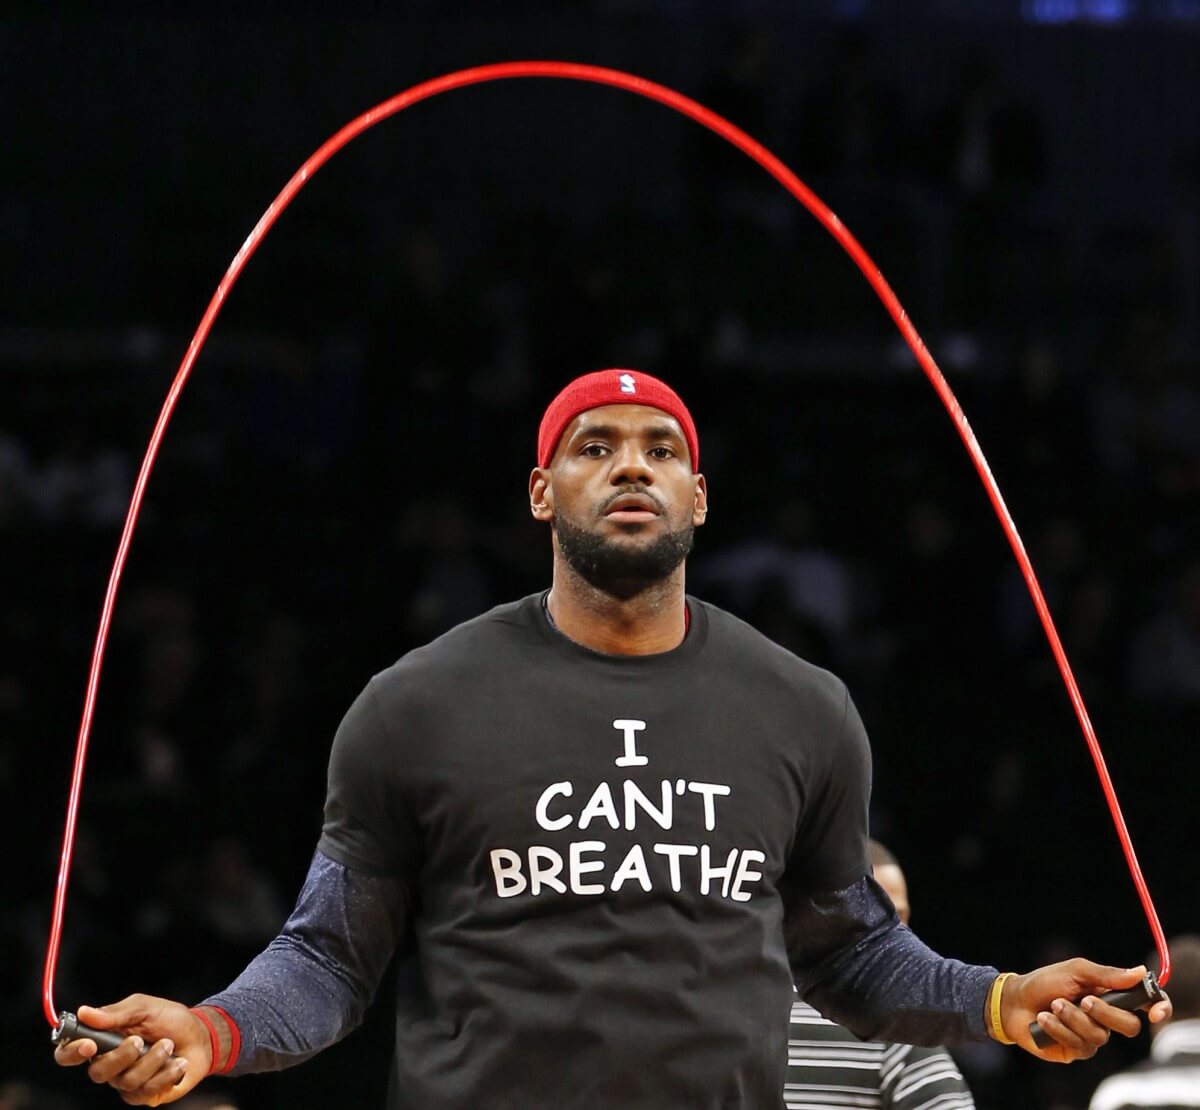 James wearing "I Can't Breathe" shirt Dec. 3. (AP)